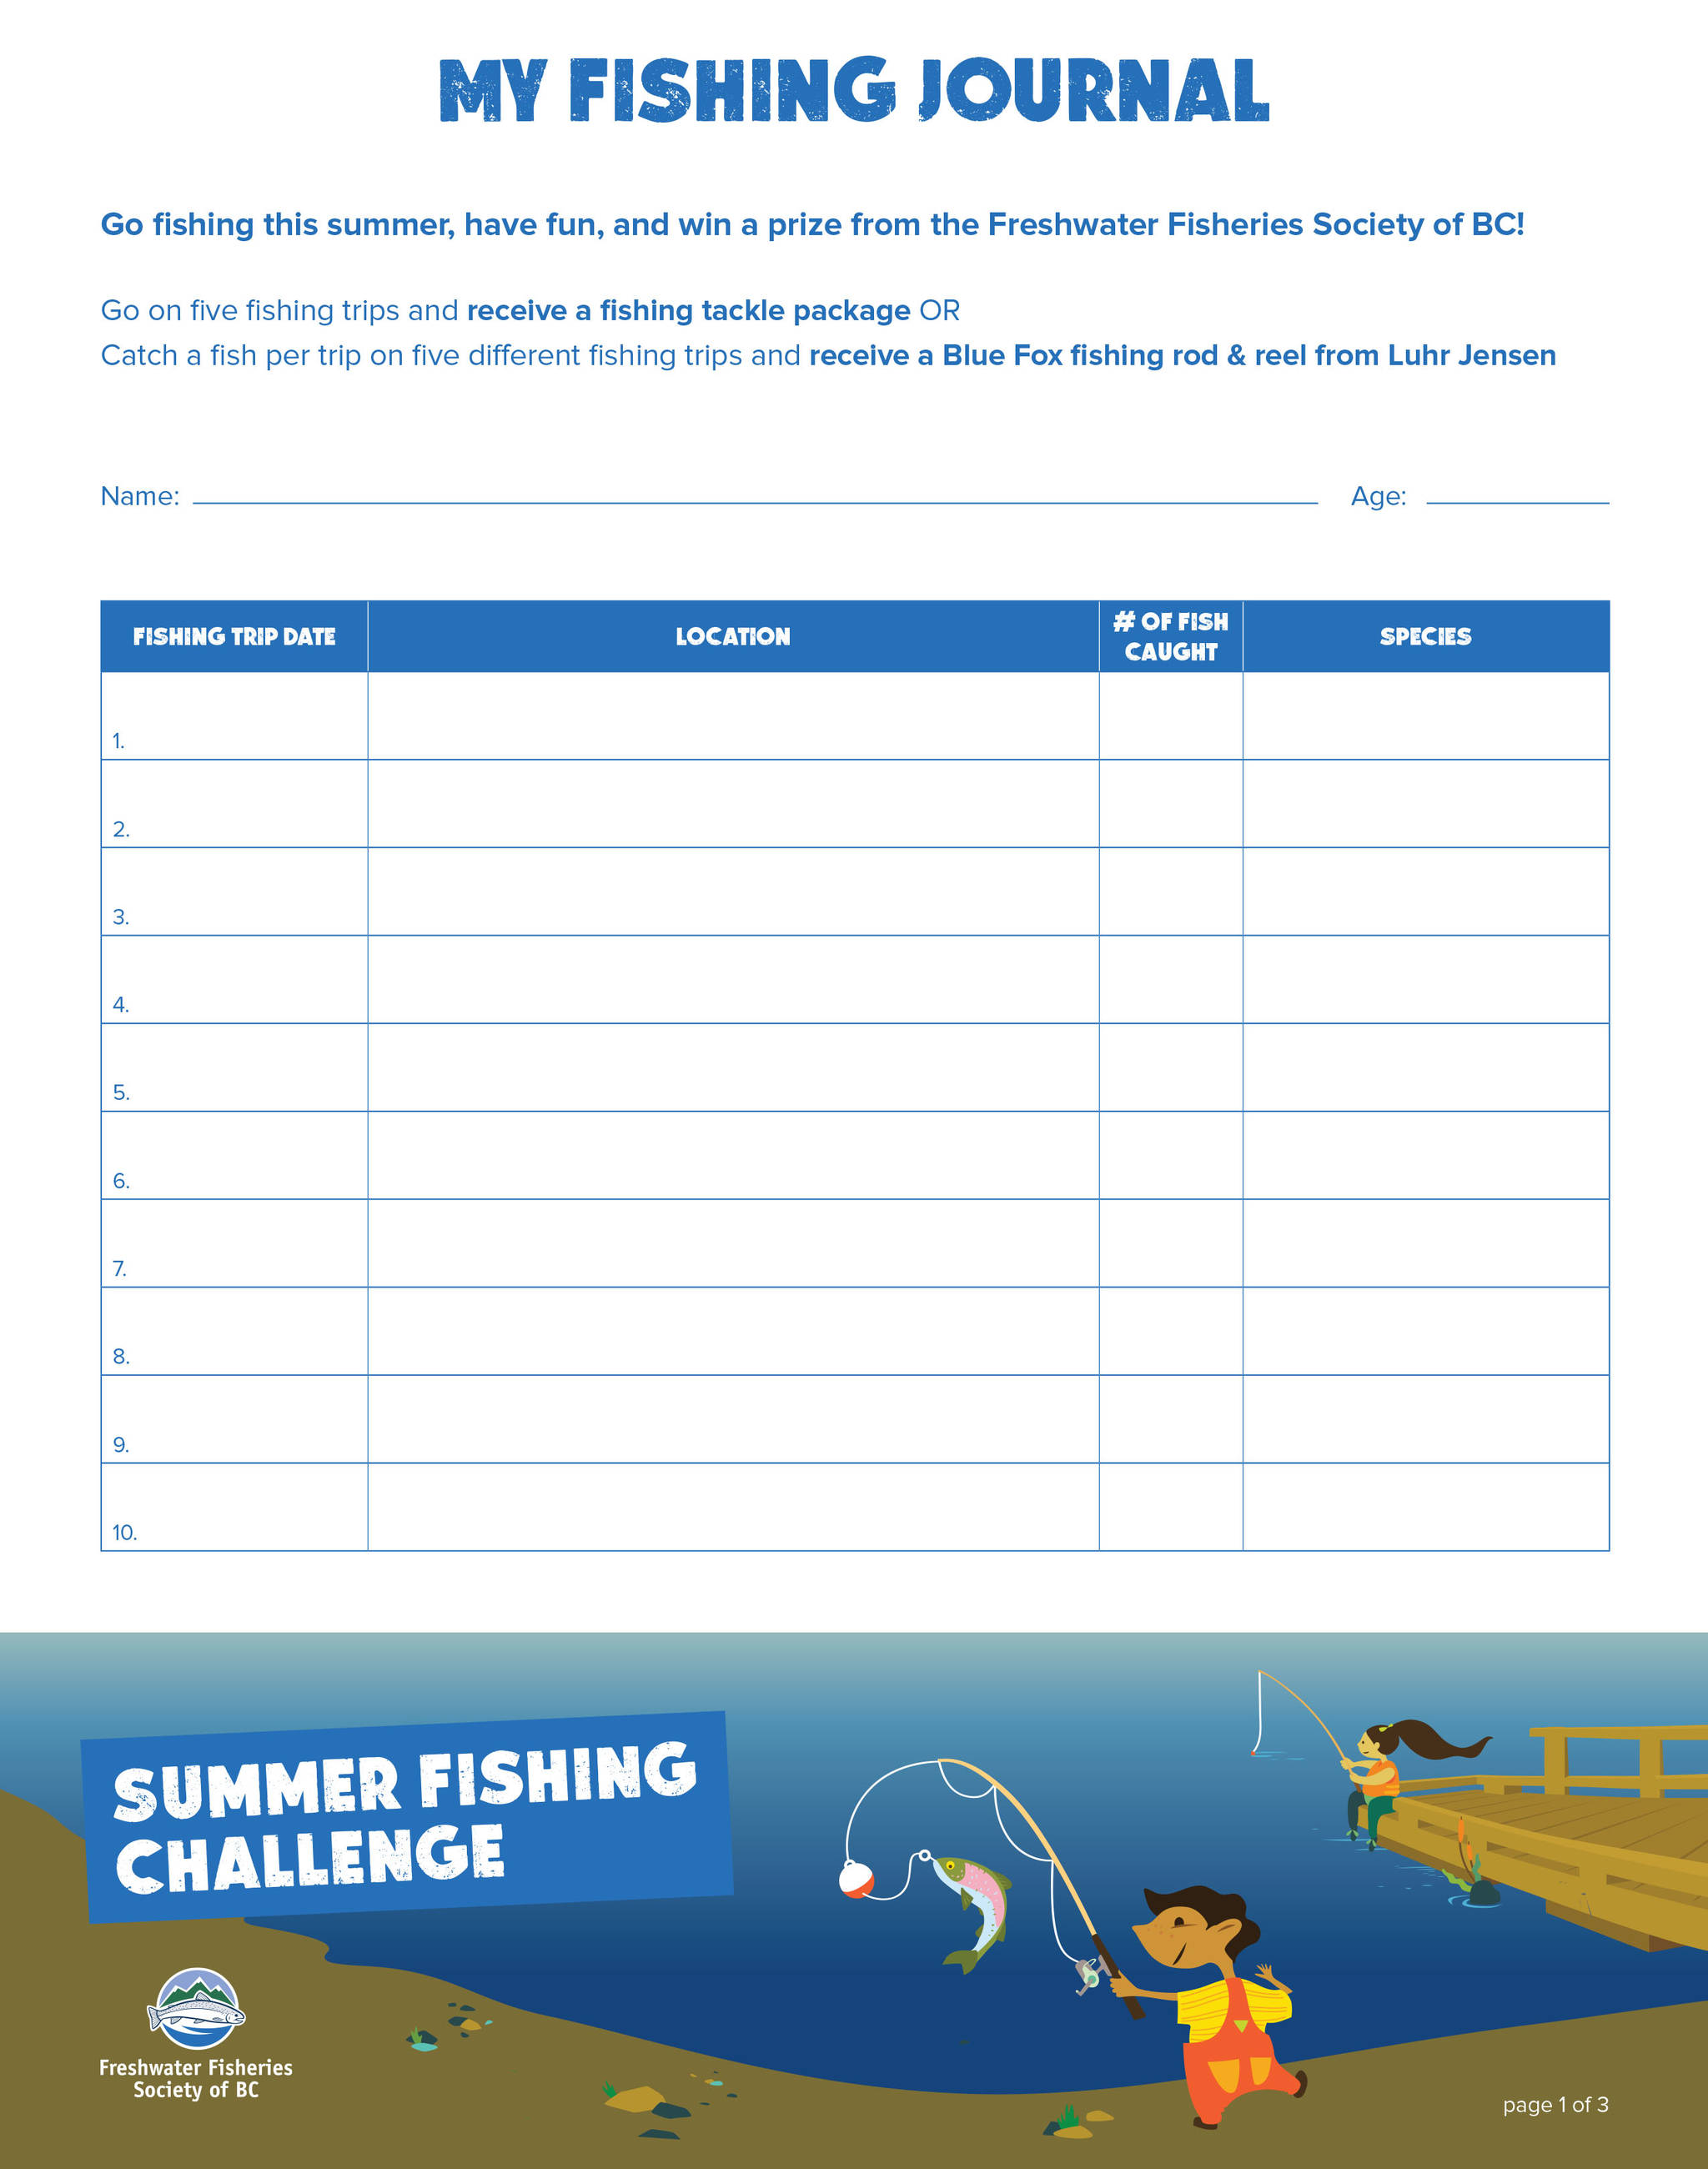 21956155_web1_200626-CDT-Summer-Fishing-Challenge-3_1